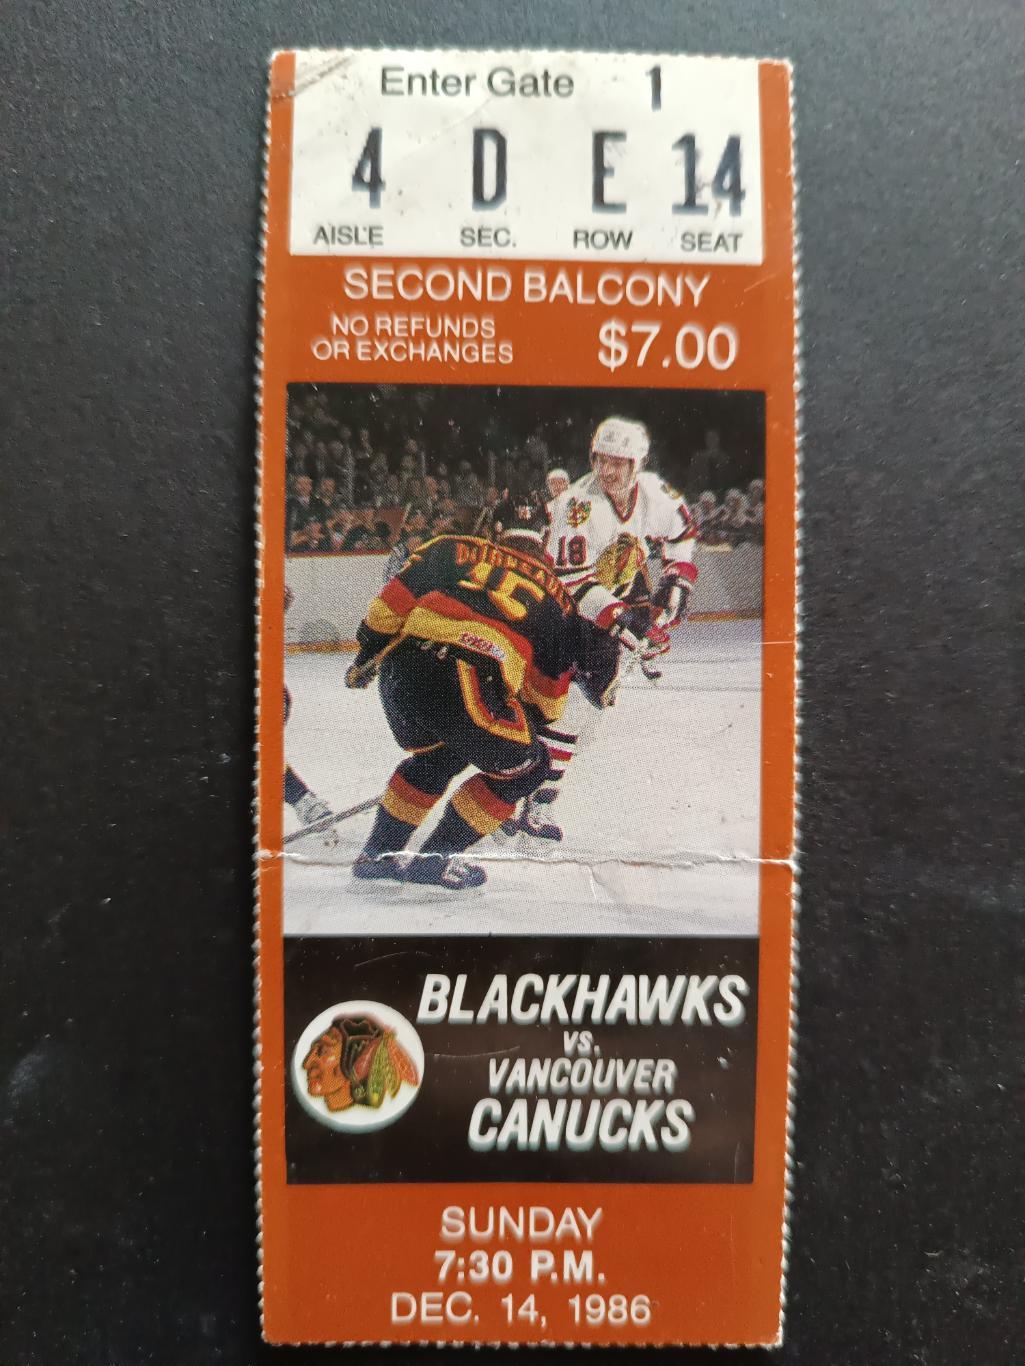 БИЛЕТ МАТЧА ХОККЕЙ БЛЭКХОУКС КЭНАКС 1986 DEC 14 NHL BLACK HAWKS VS. CANUCKS